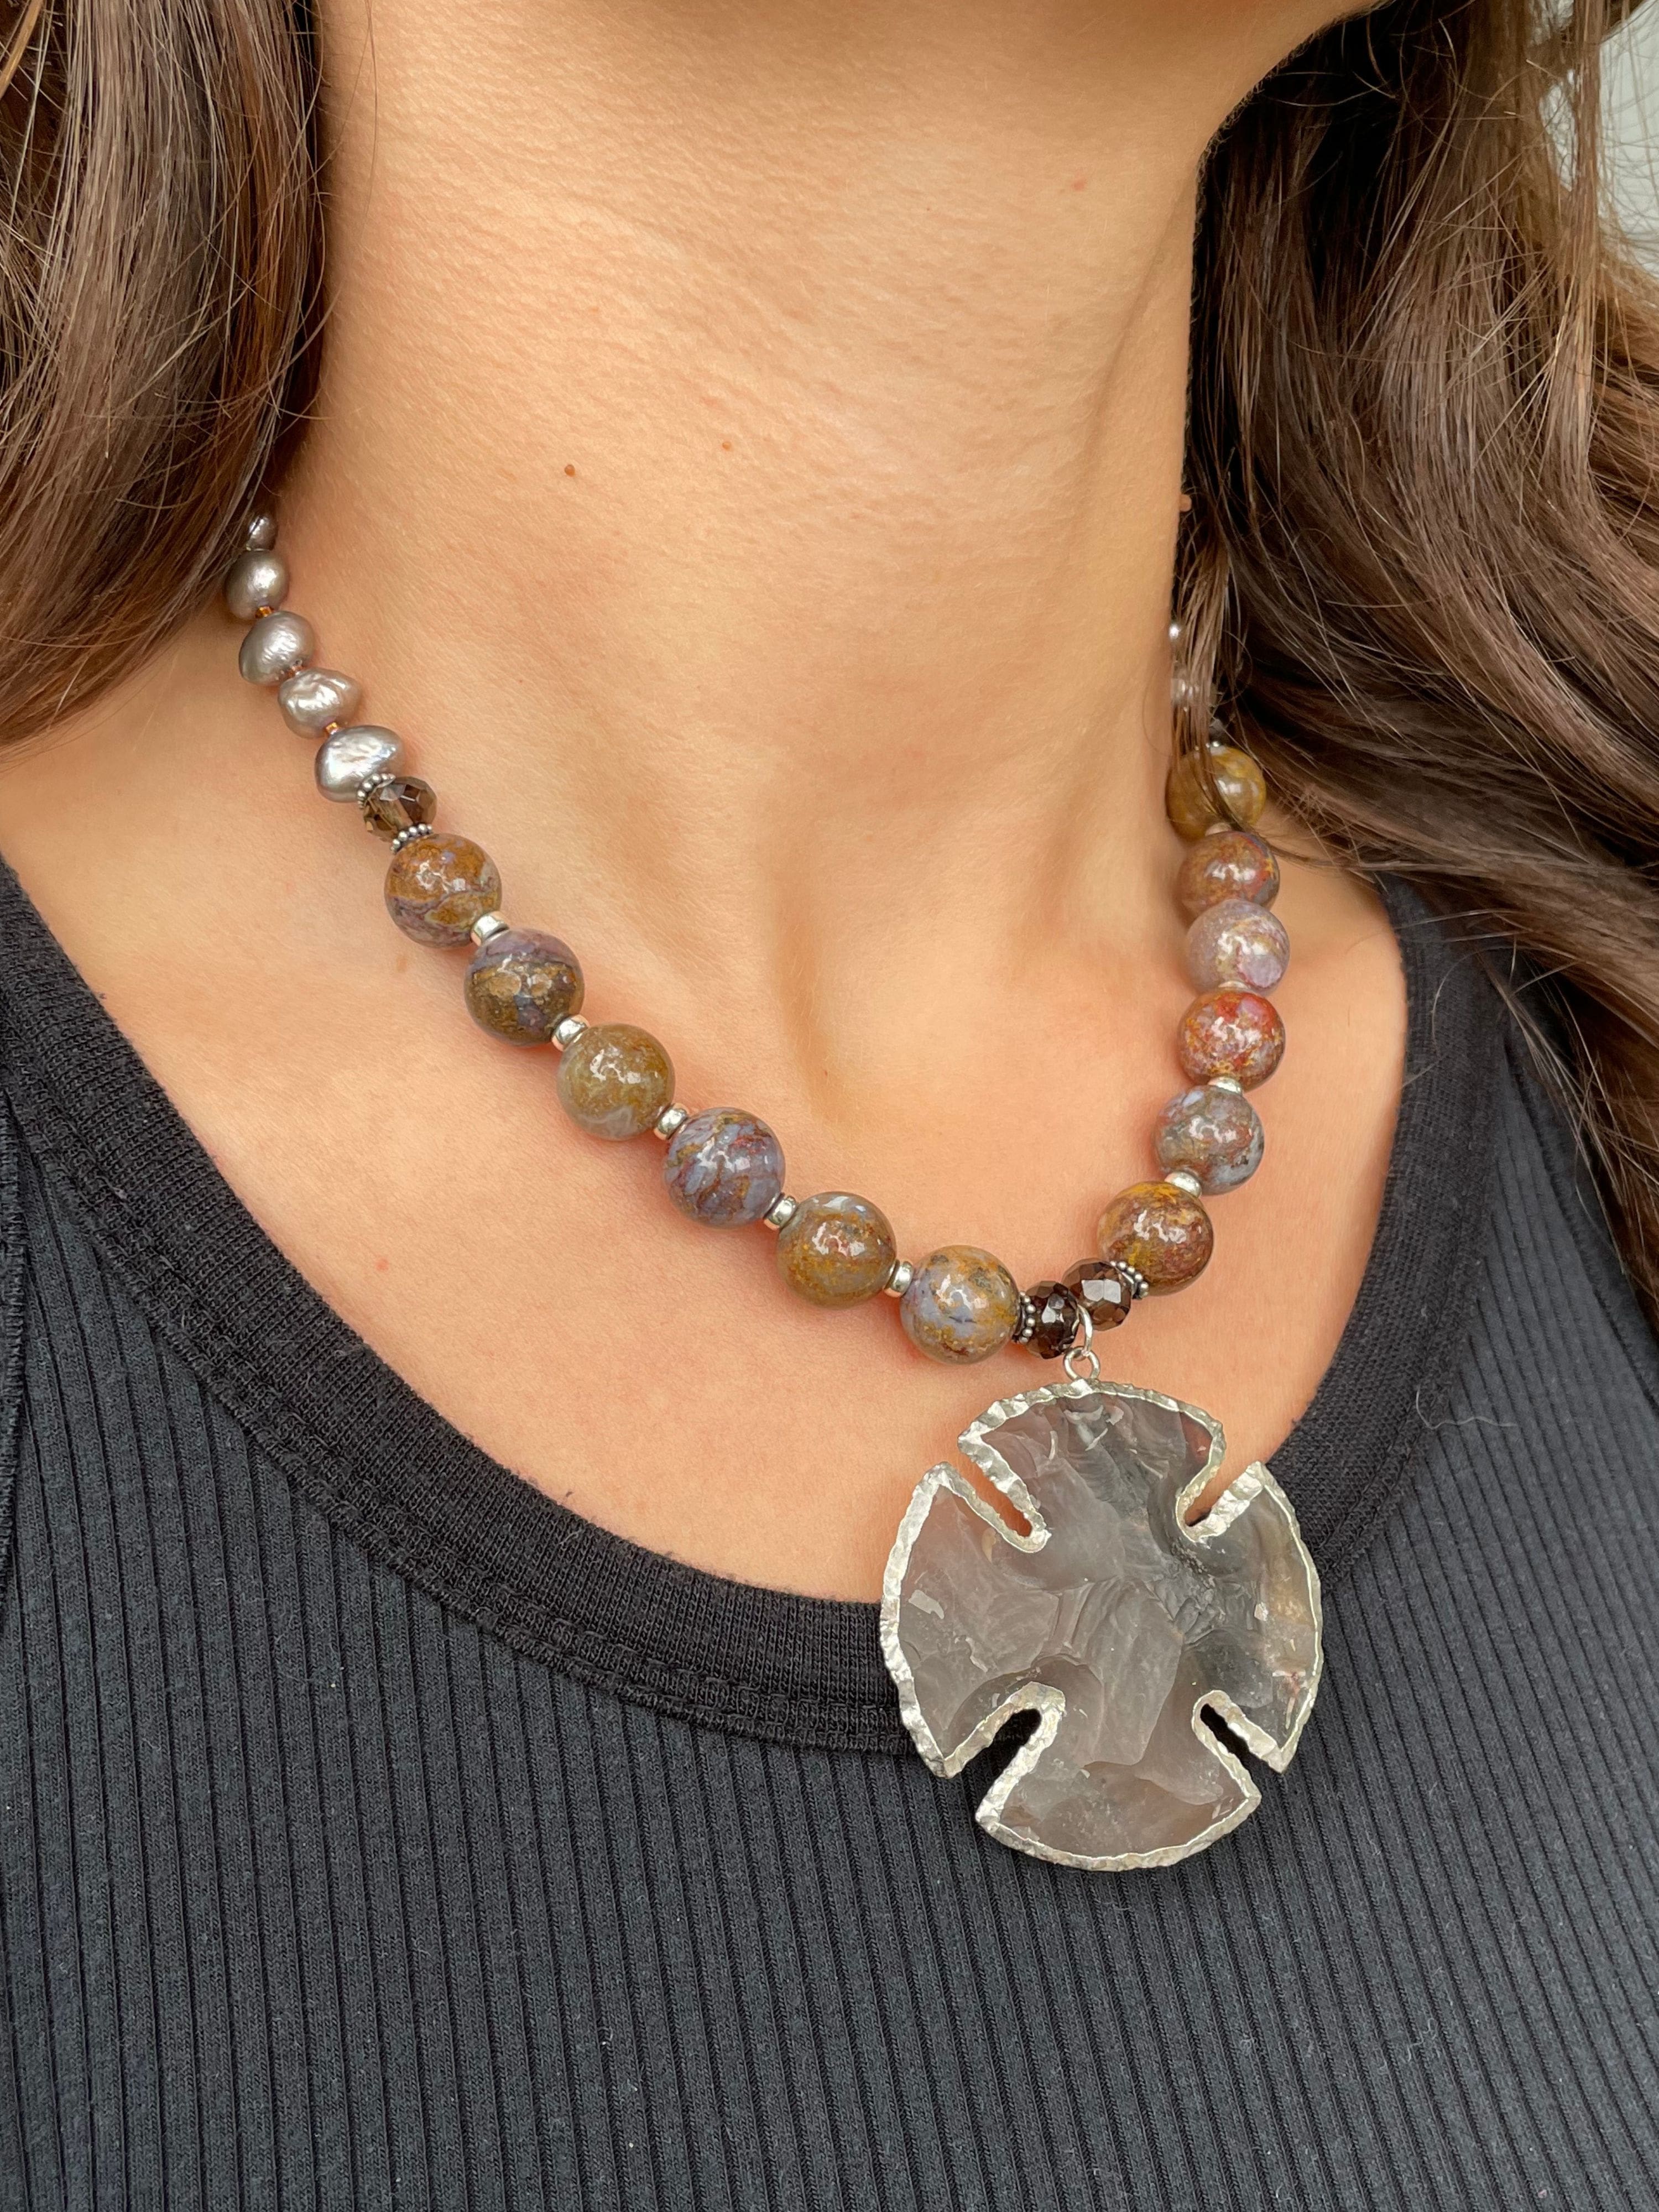 Faith Cross Necklace in Silver